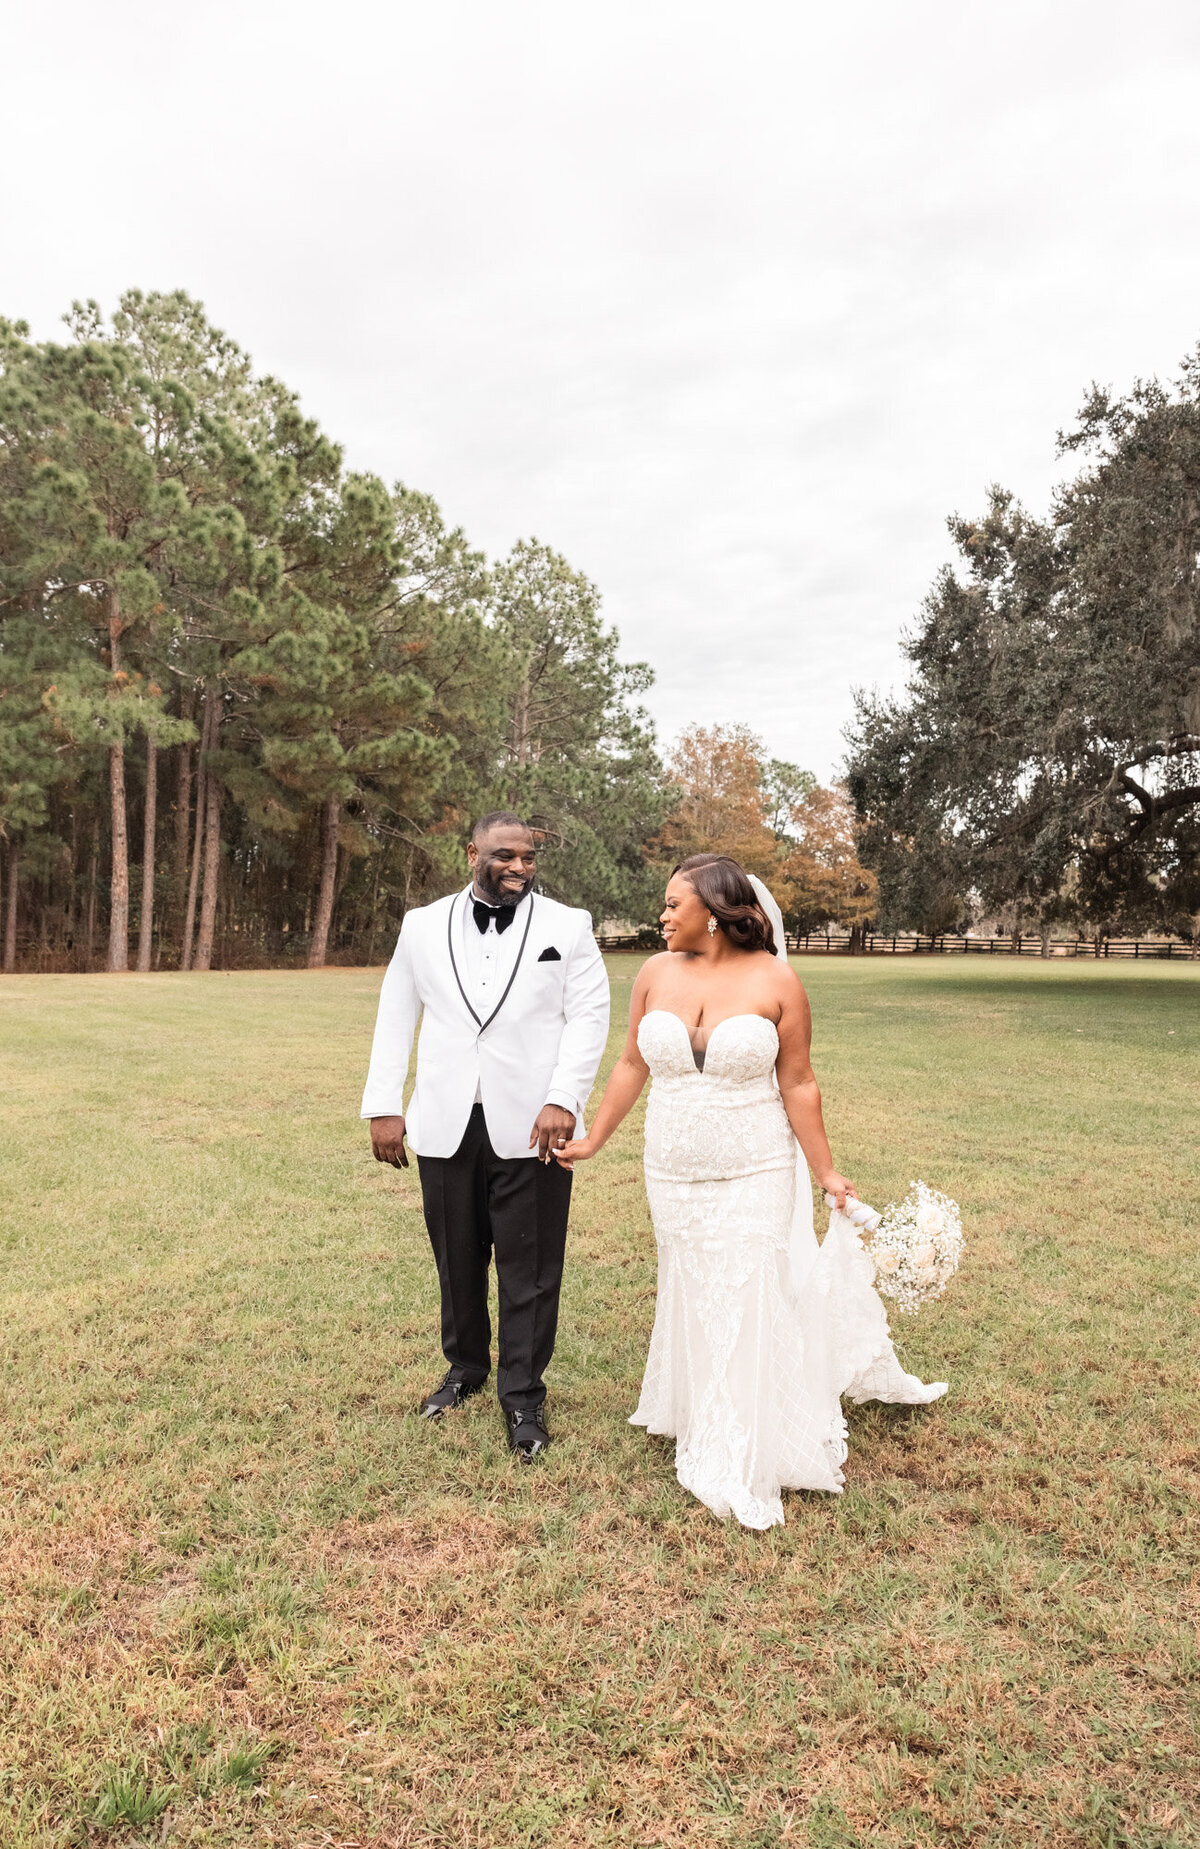 Michael and Mishka-Wedding-Green Cabin Ranch-Astatula, FL-FL Wedding Photographer-Orlando Photographer-Emily Pillon Photography-S-120423-283